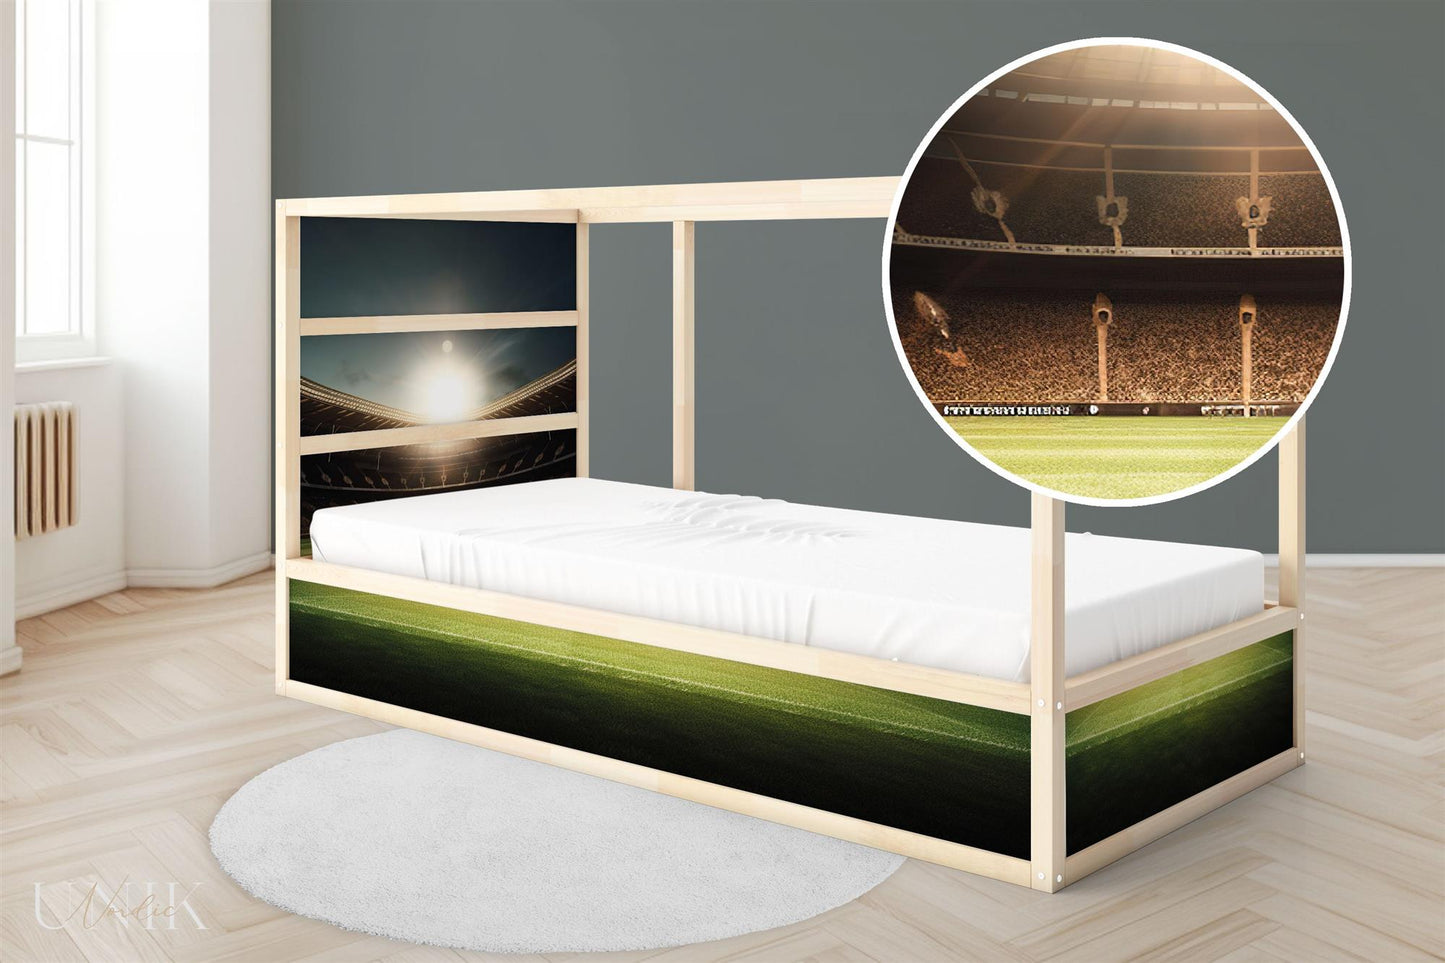 IKEA Kura Bed Sticker Set - Soccer